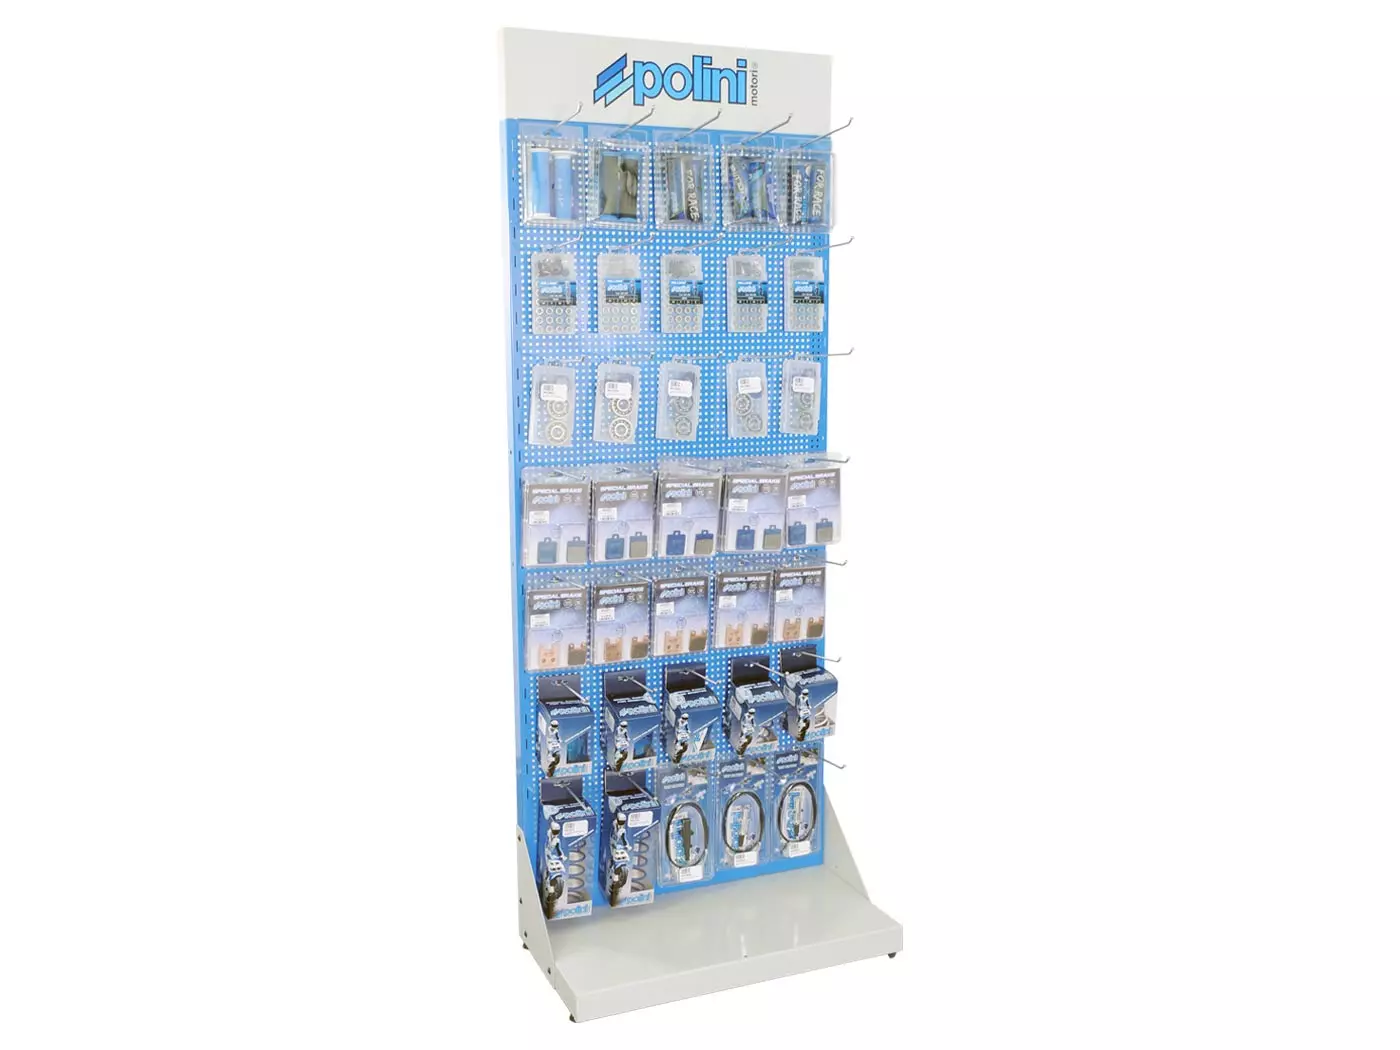 Dealer Display Polini 66x170cm voor Produktpräsentation im Ladenlokal